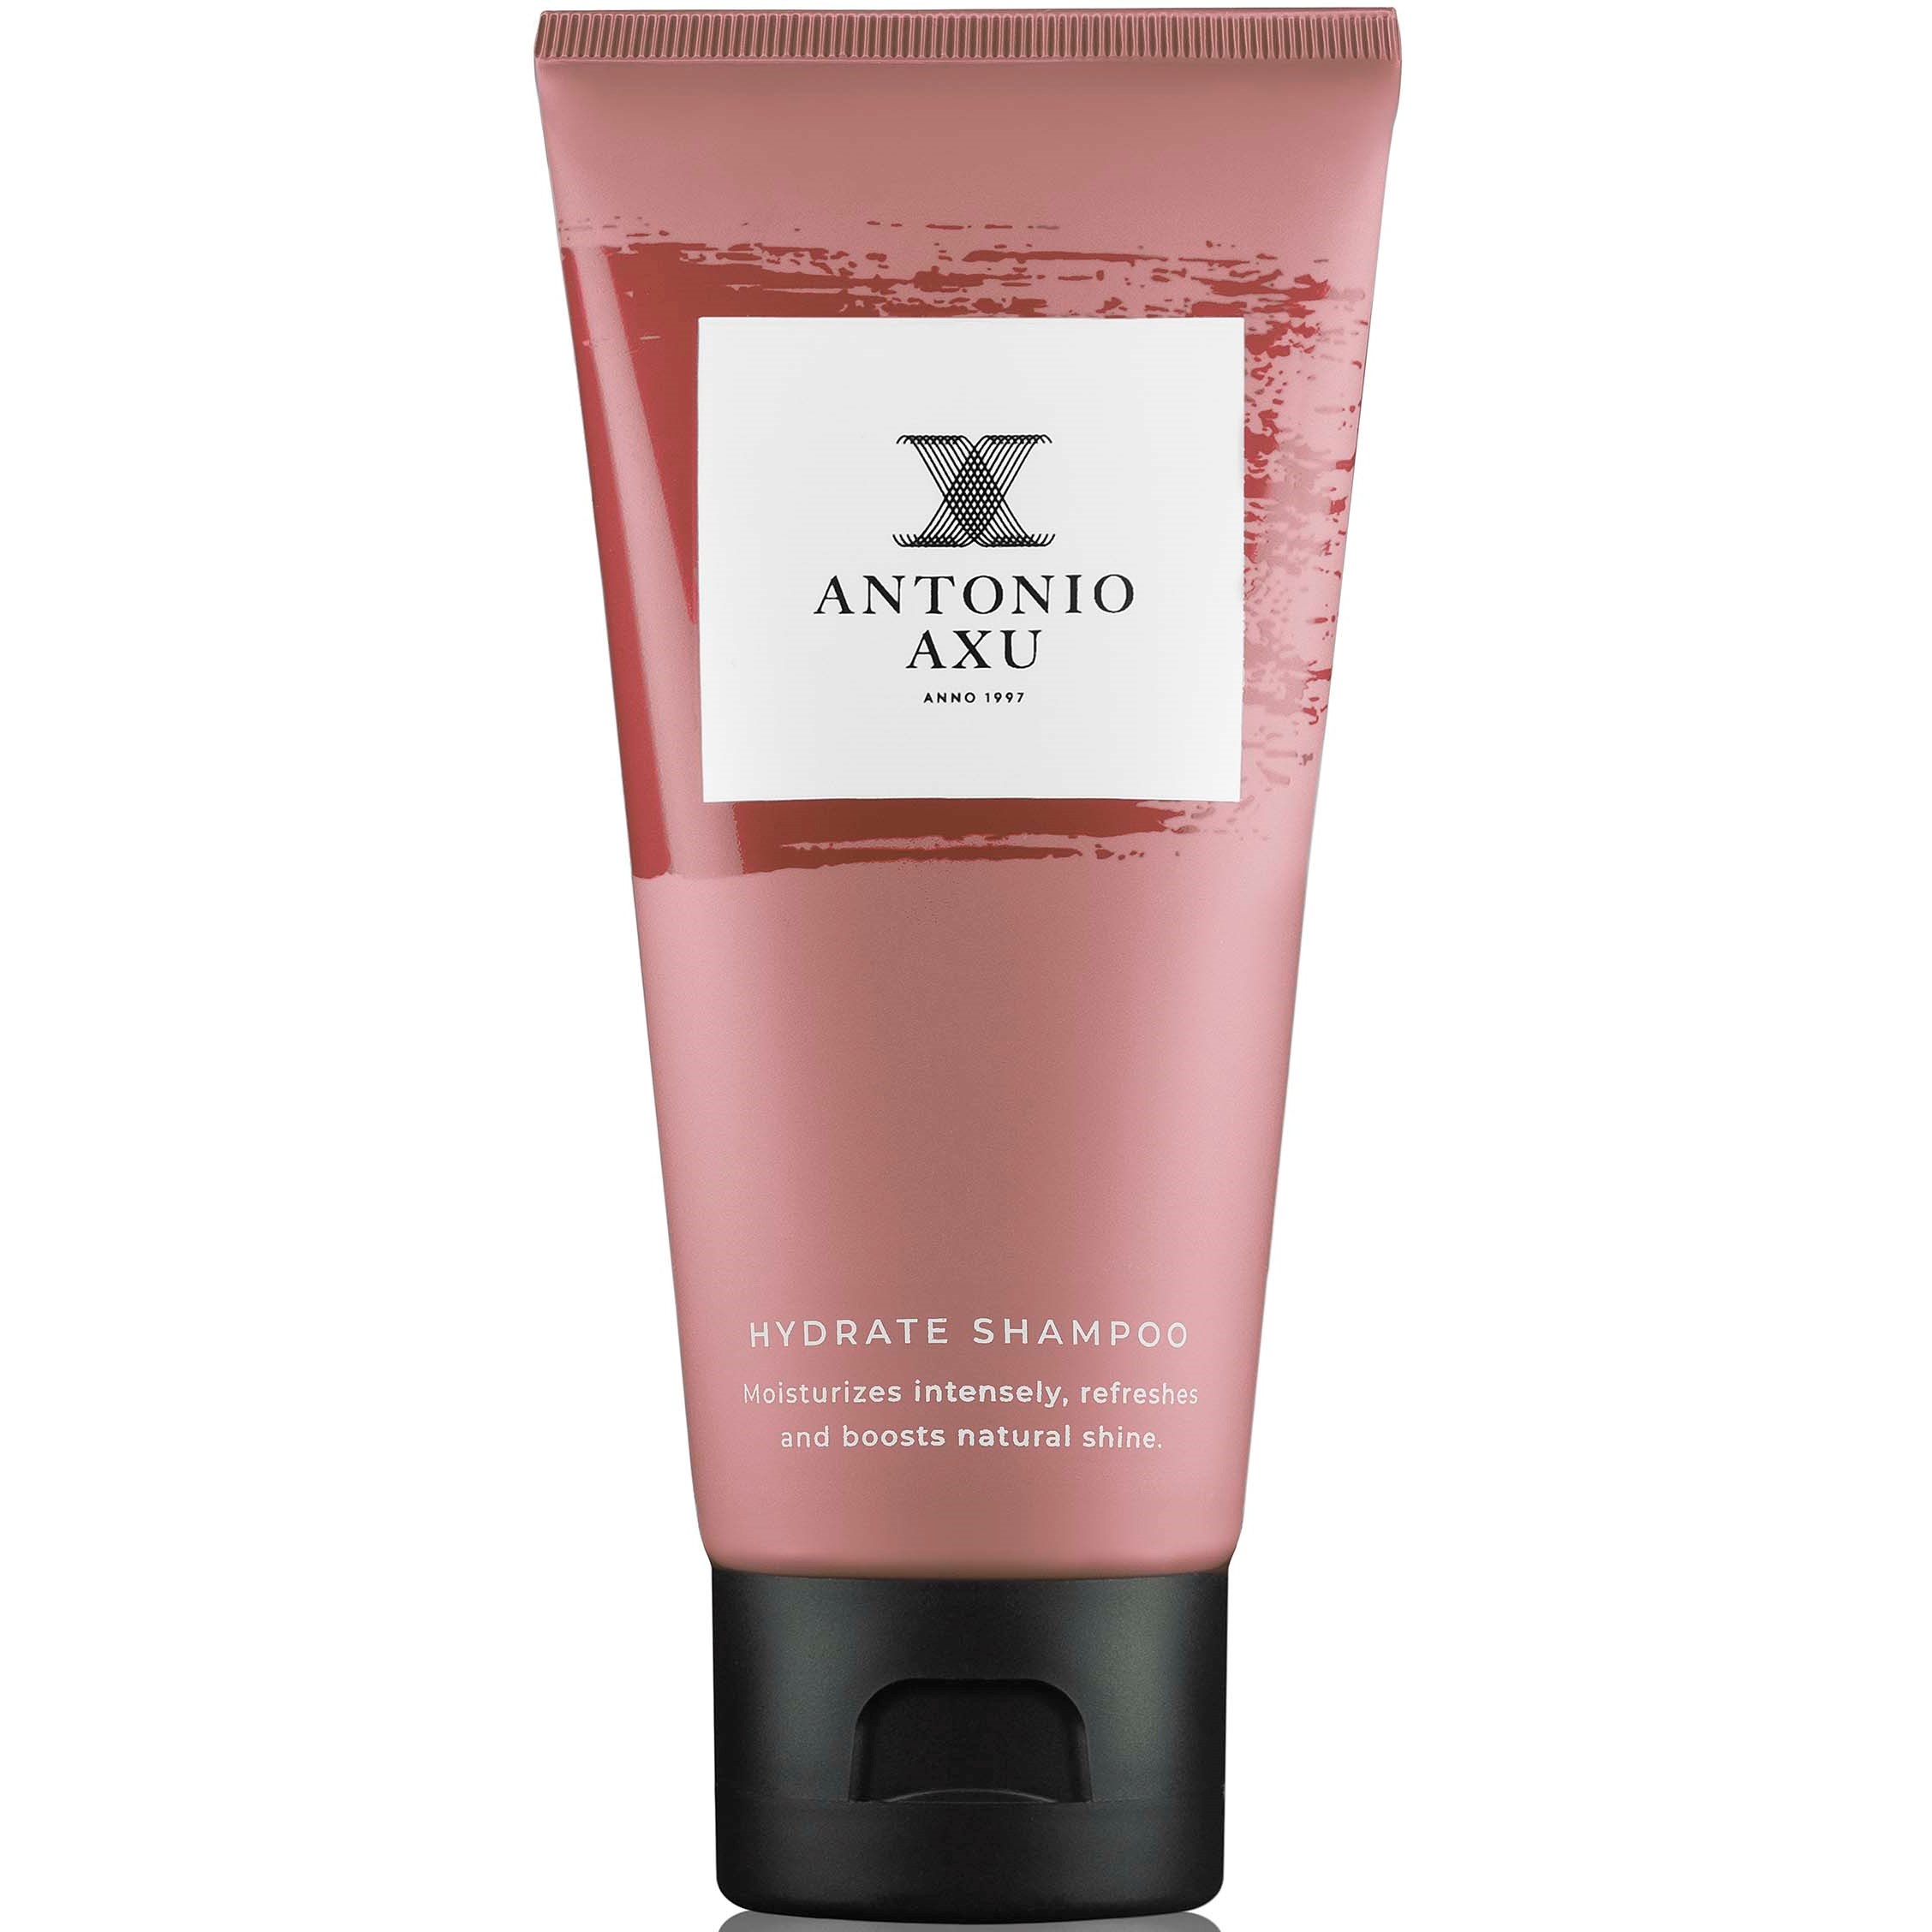 Antonio Axu Hydrate Shampoo Travel Size 60 ml